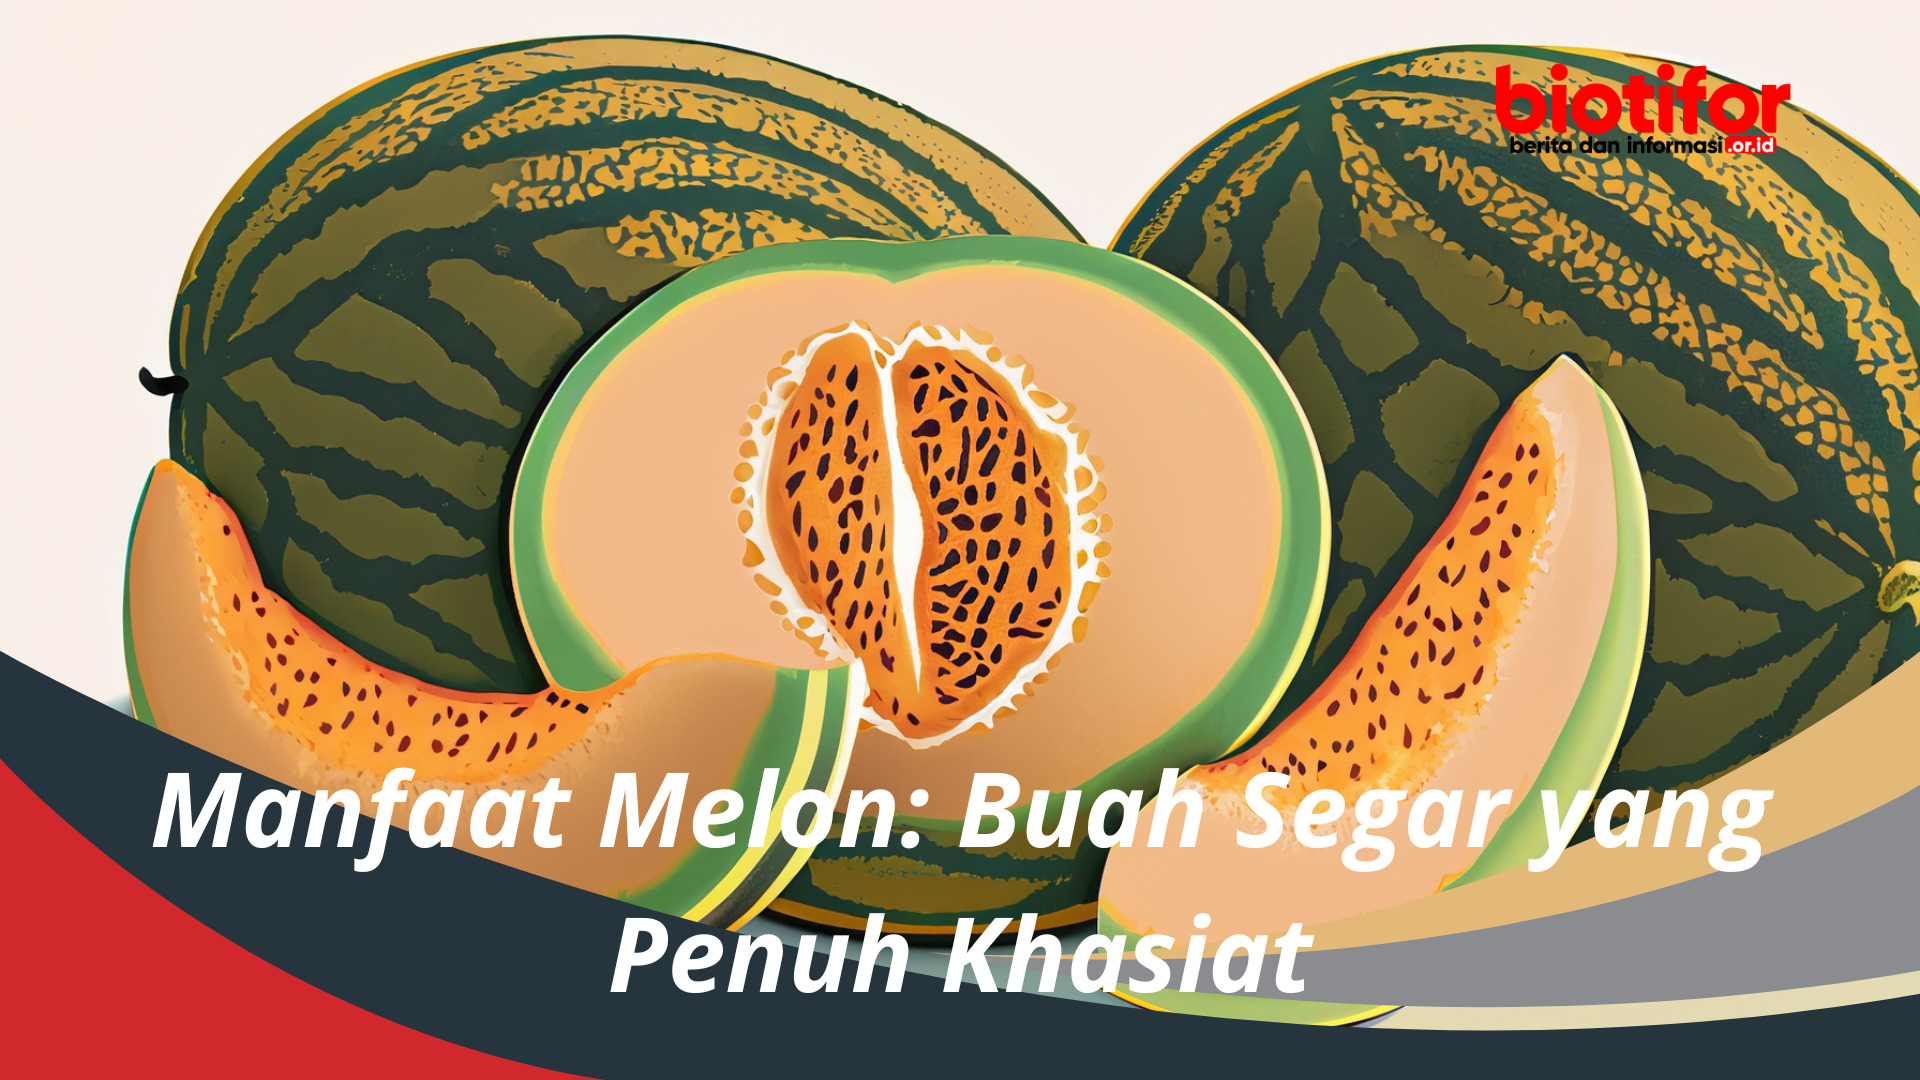 Manfaat Melon: Buah Segar yang Penuh Khasiat